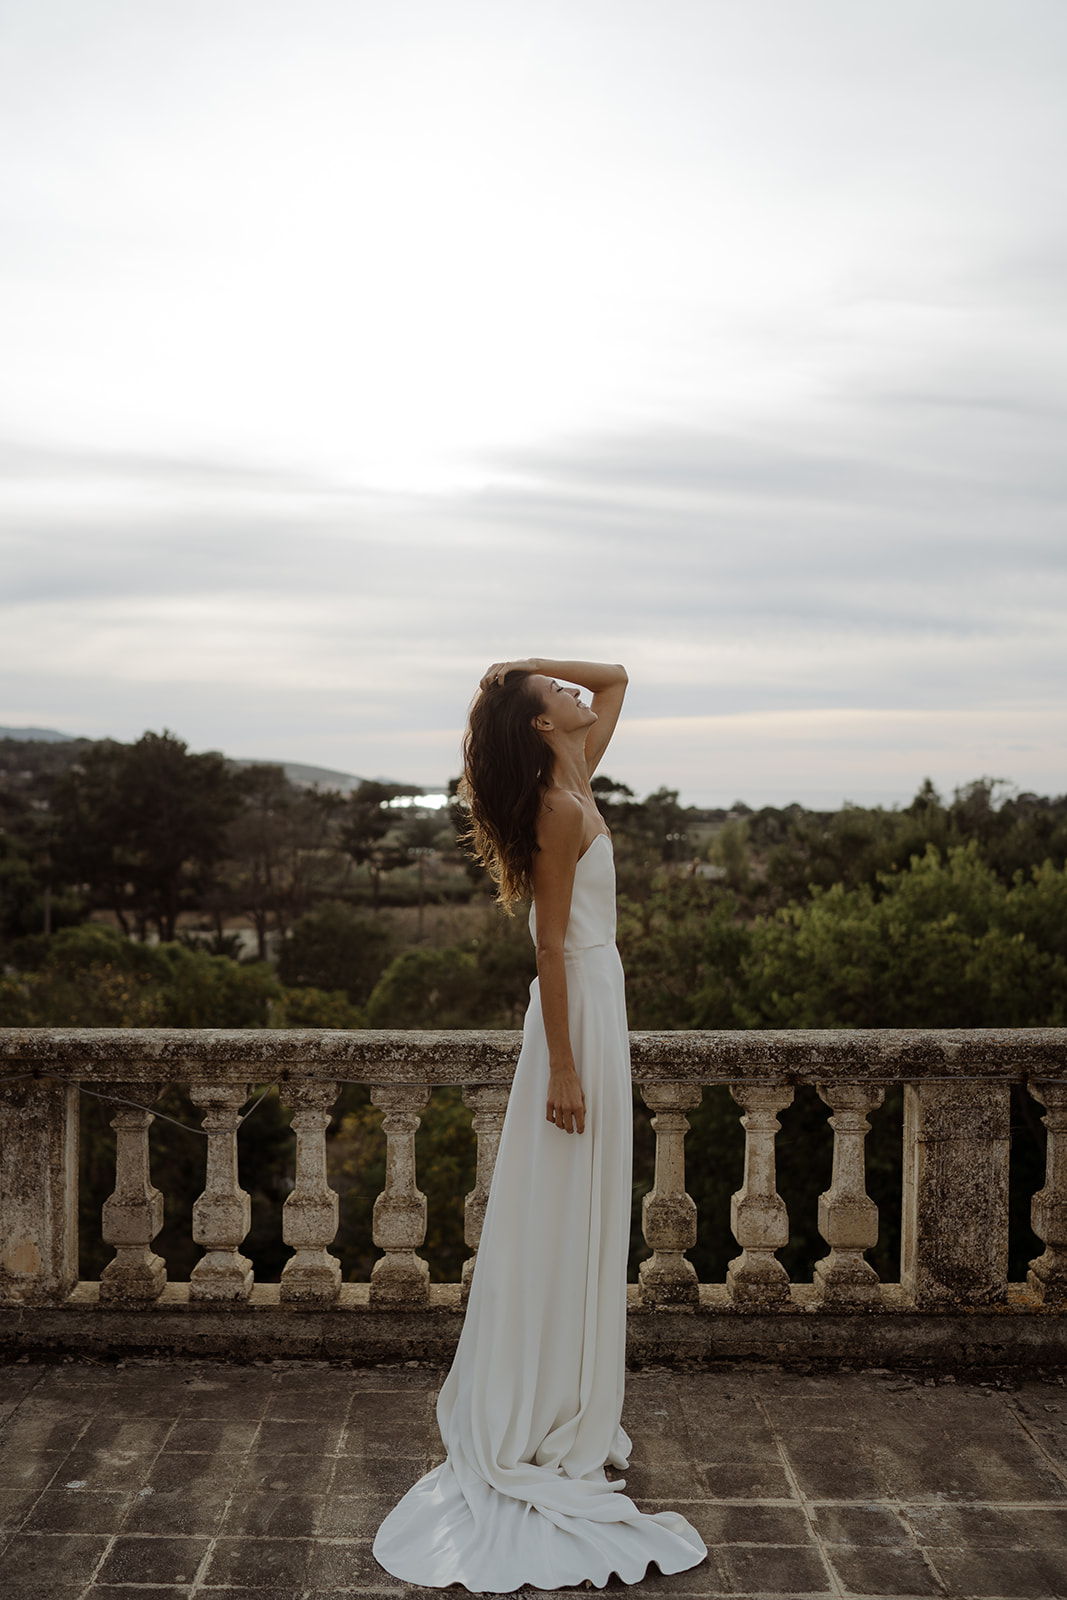 Cecile Casabianca Collection 2020 - Robes de mariée - Blog Mariage Madame C